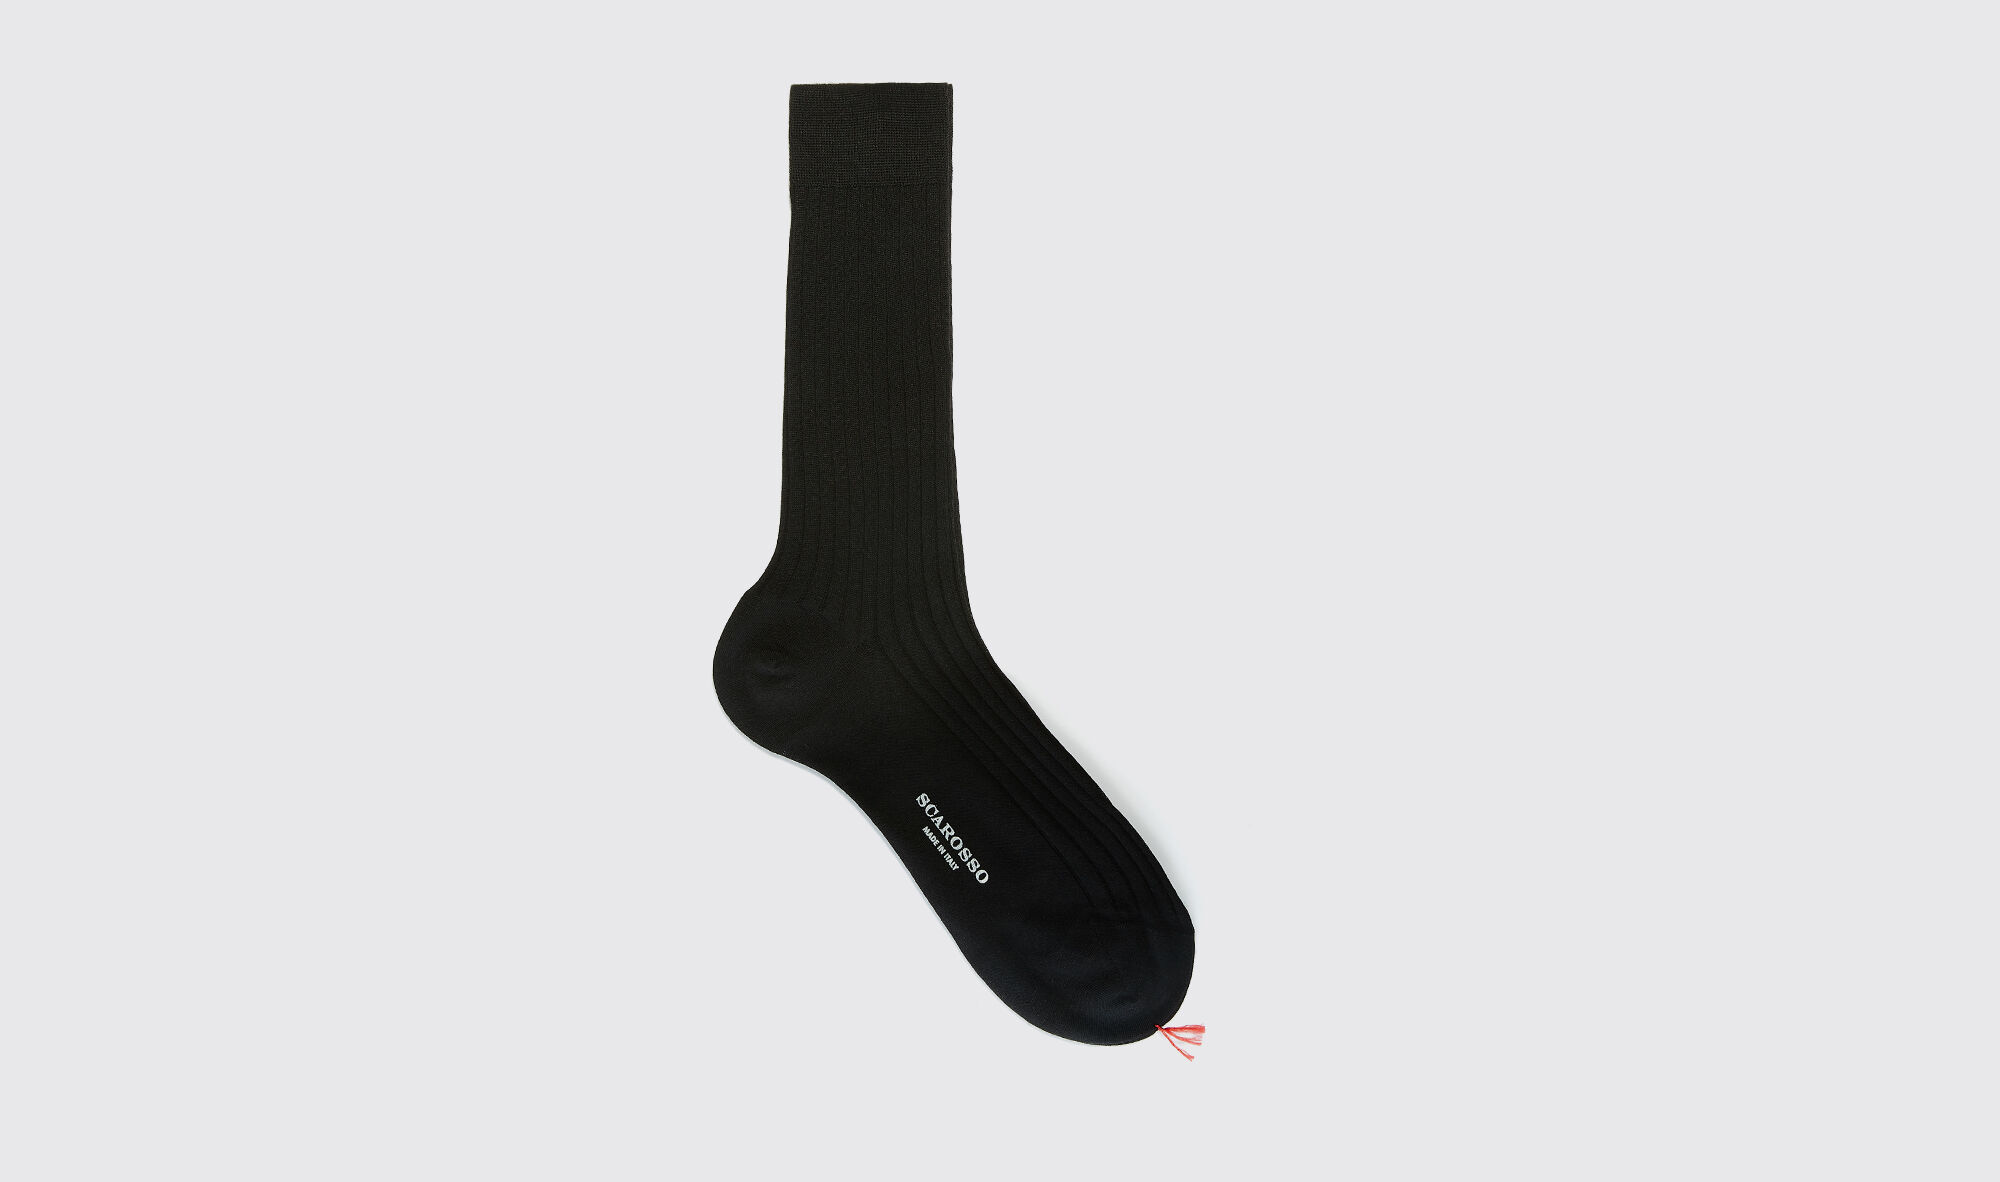 scarosso black wool calf socks - uomo calze nero - lana merino 42-43